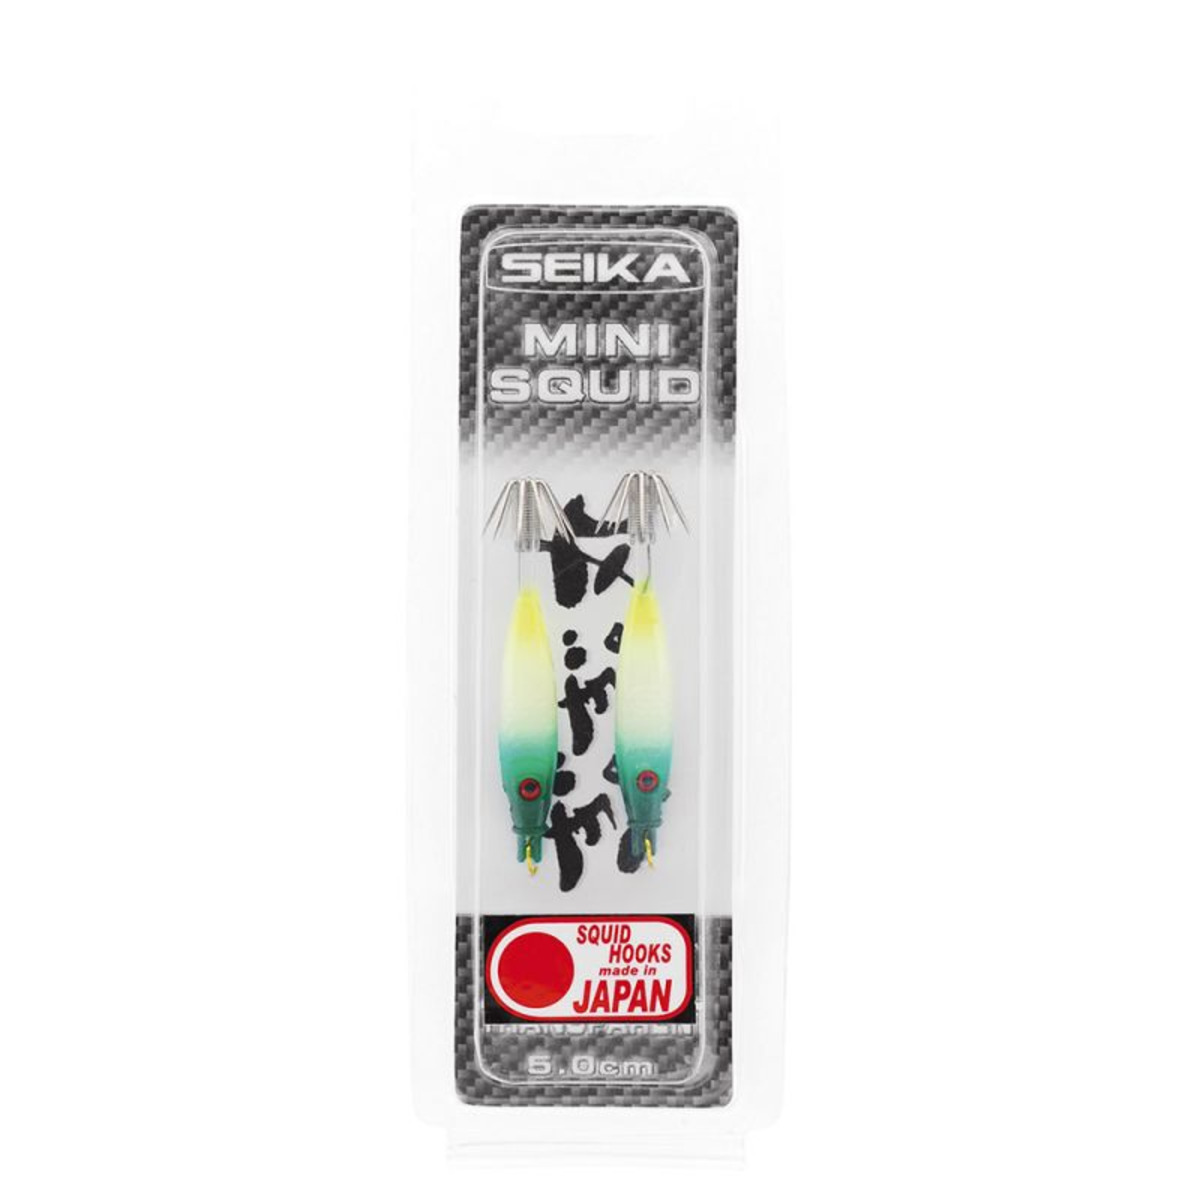 Seika Mini Squid Soft Trasparent - 50 mm - 38 - Vert-Blanc-Jaune         